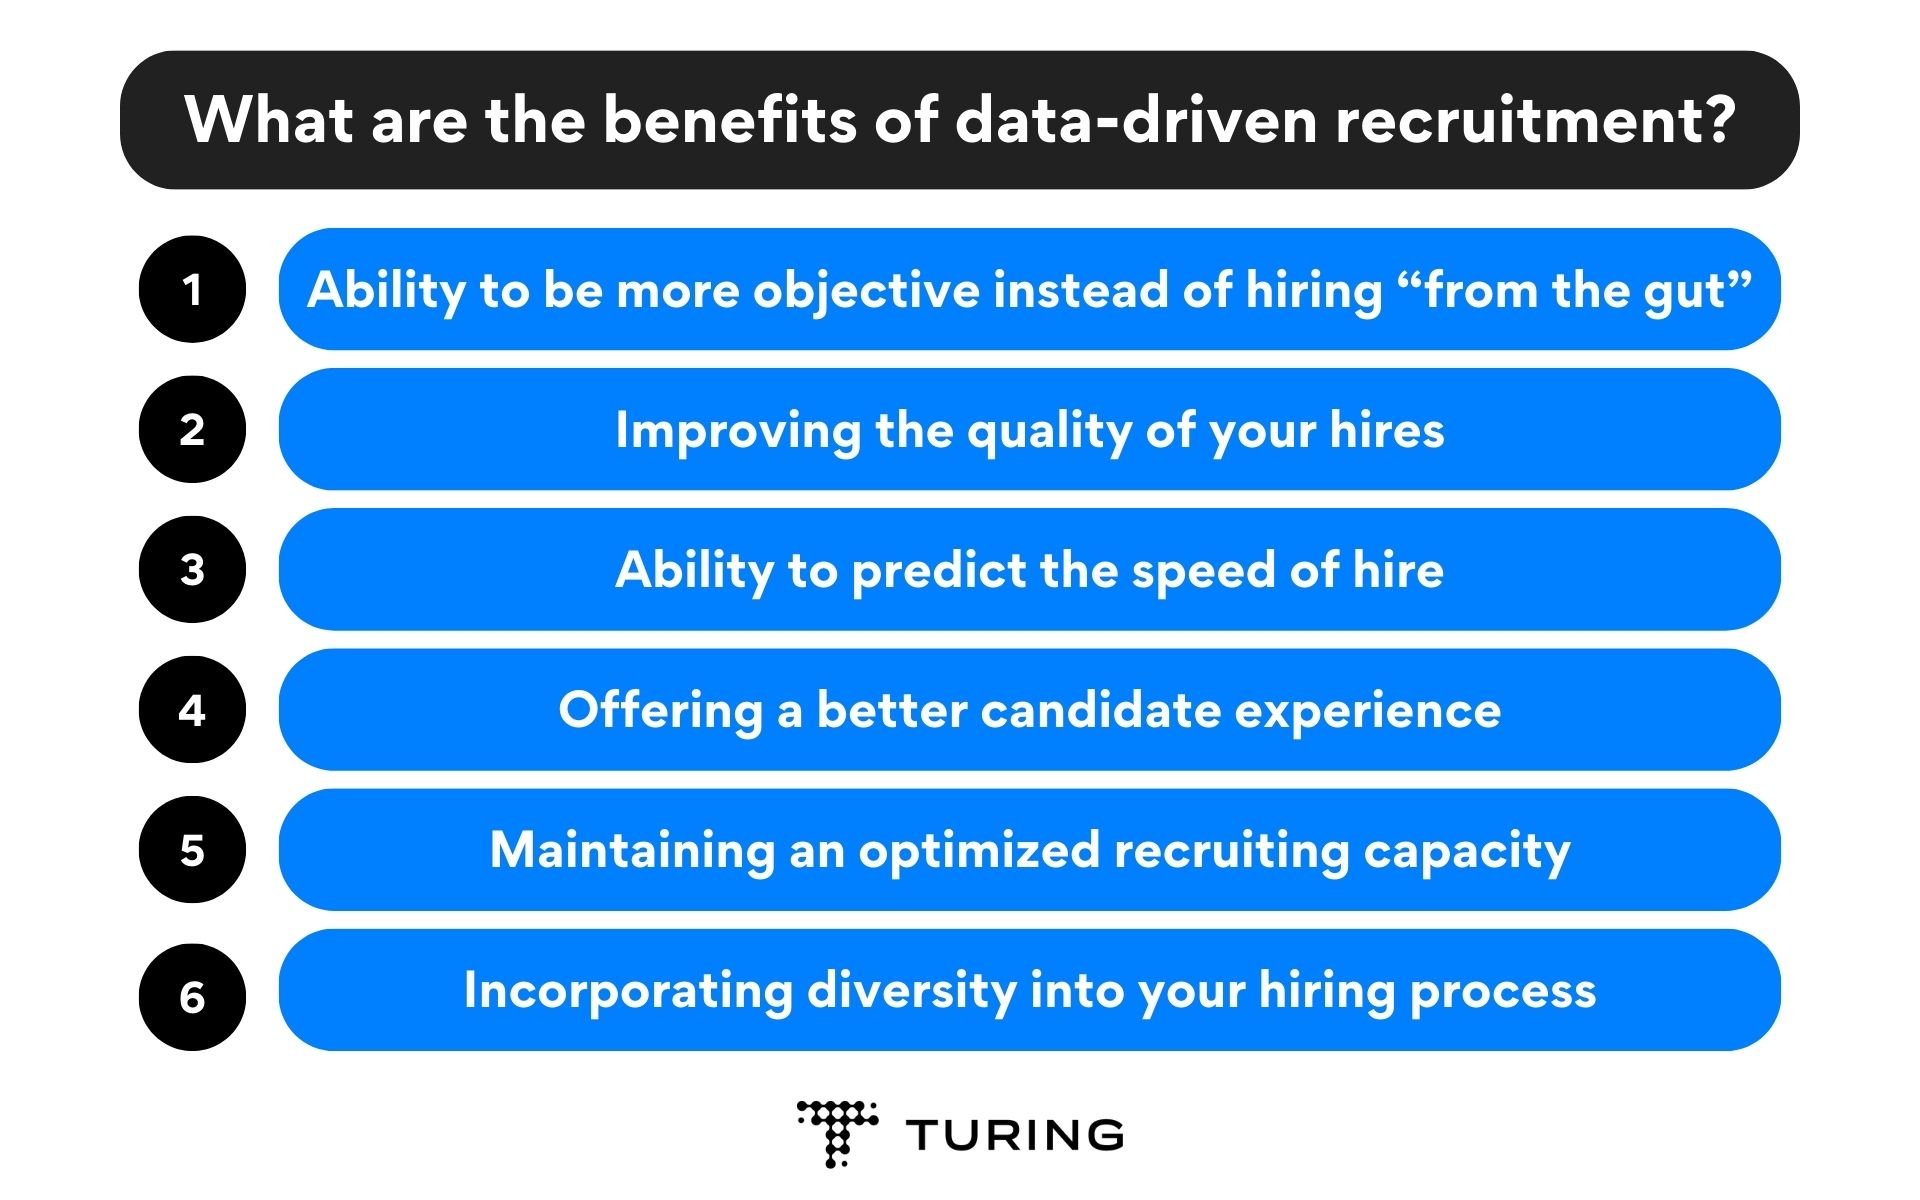 Data-driven recruitment